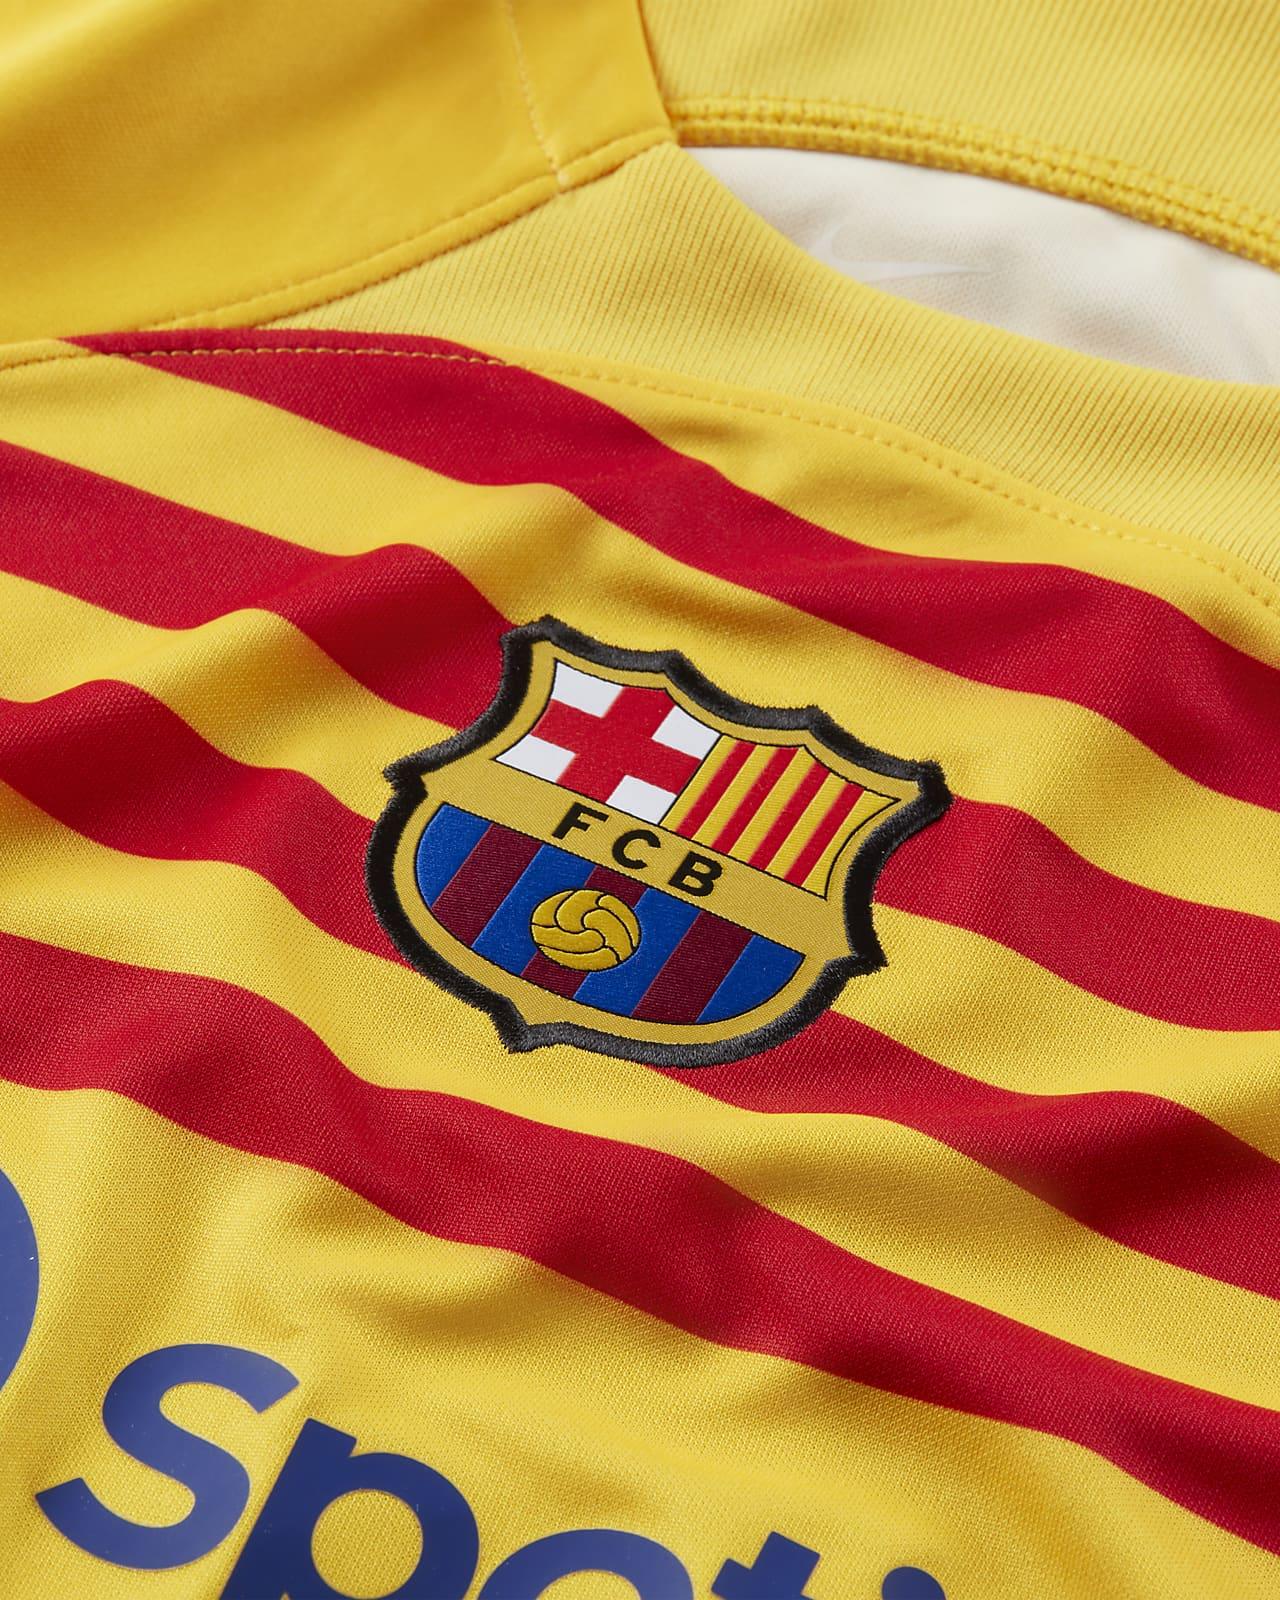 Barcelona Team 2023 Wallpapers - Top Free Barcelona Team 2023 ...